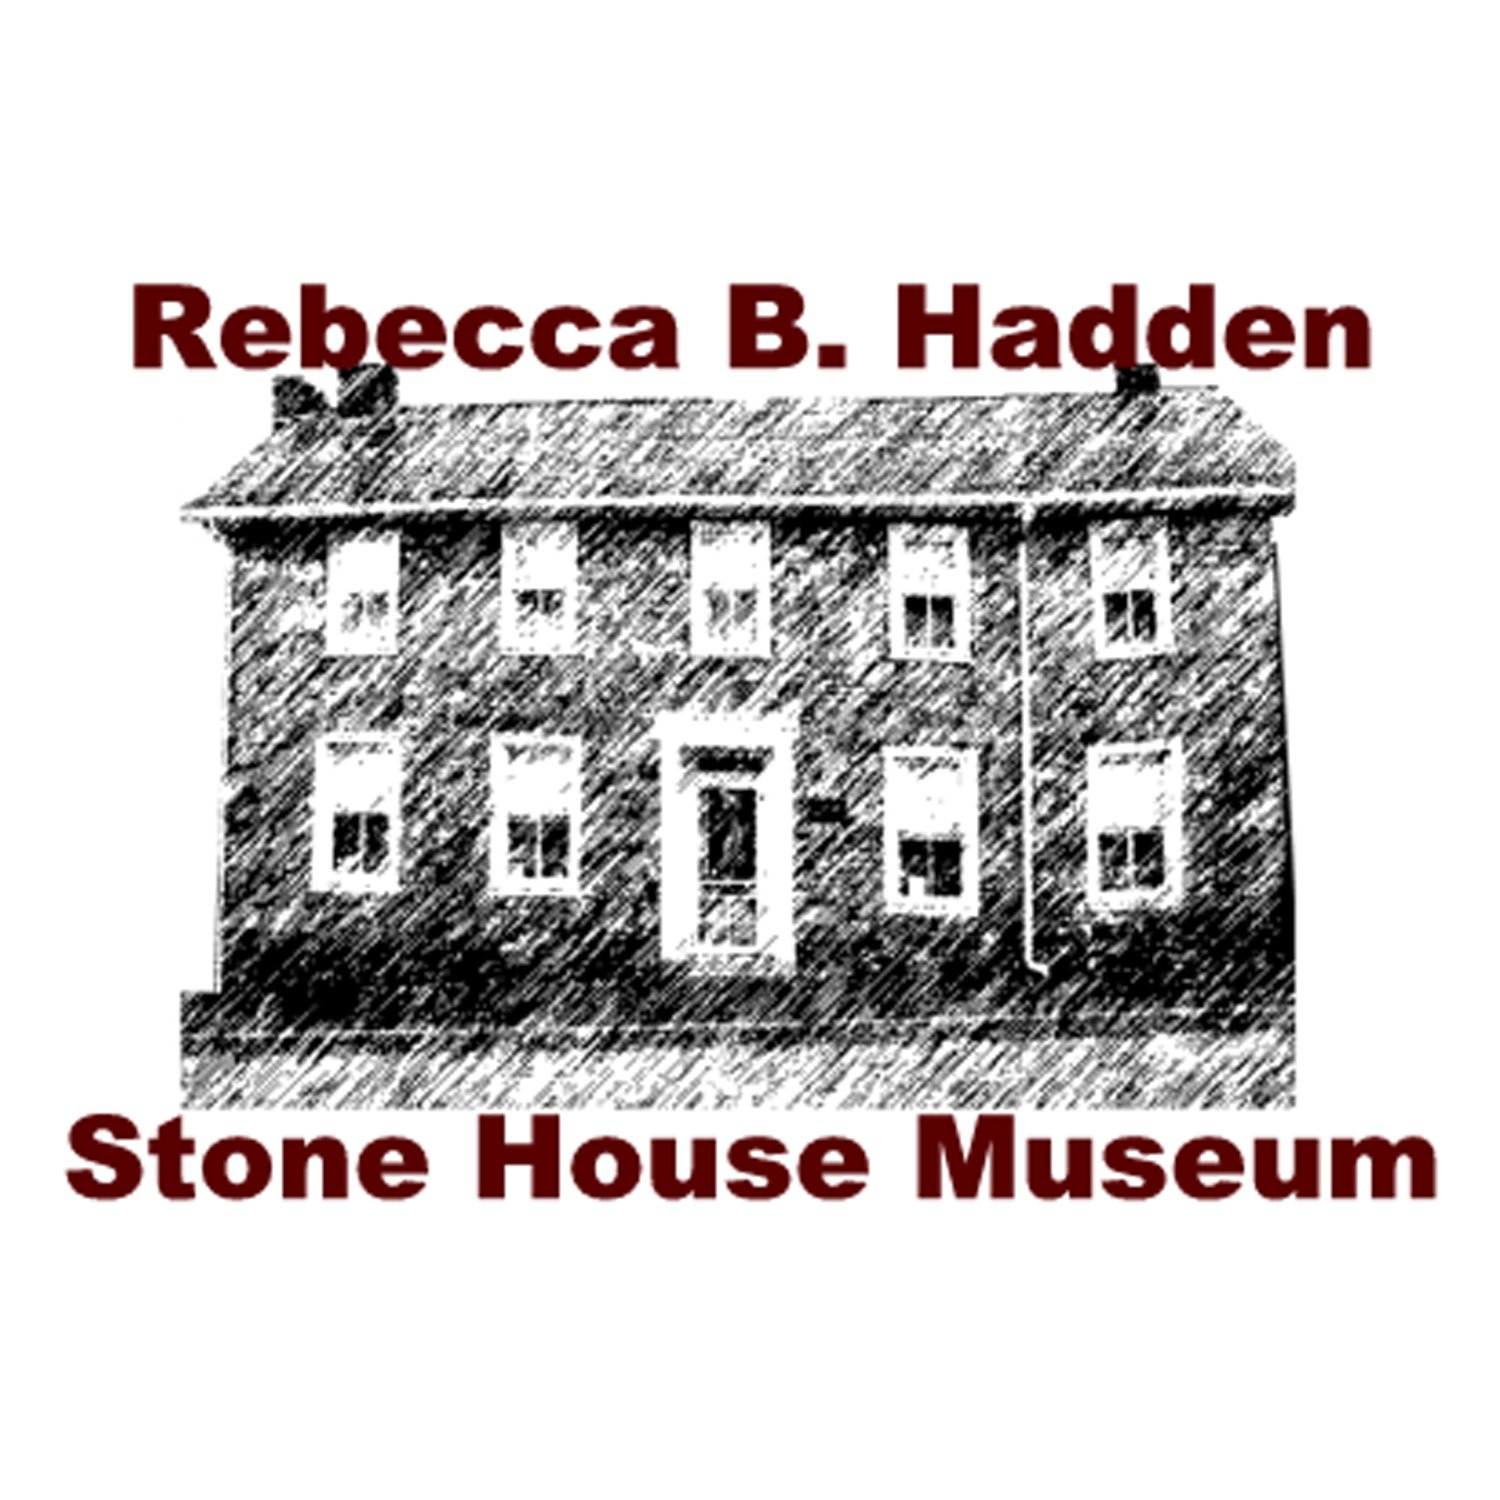 Rebecca B. Hadden Stone House Museum.jpeg